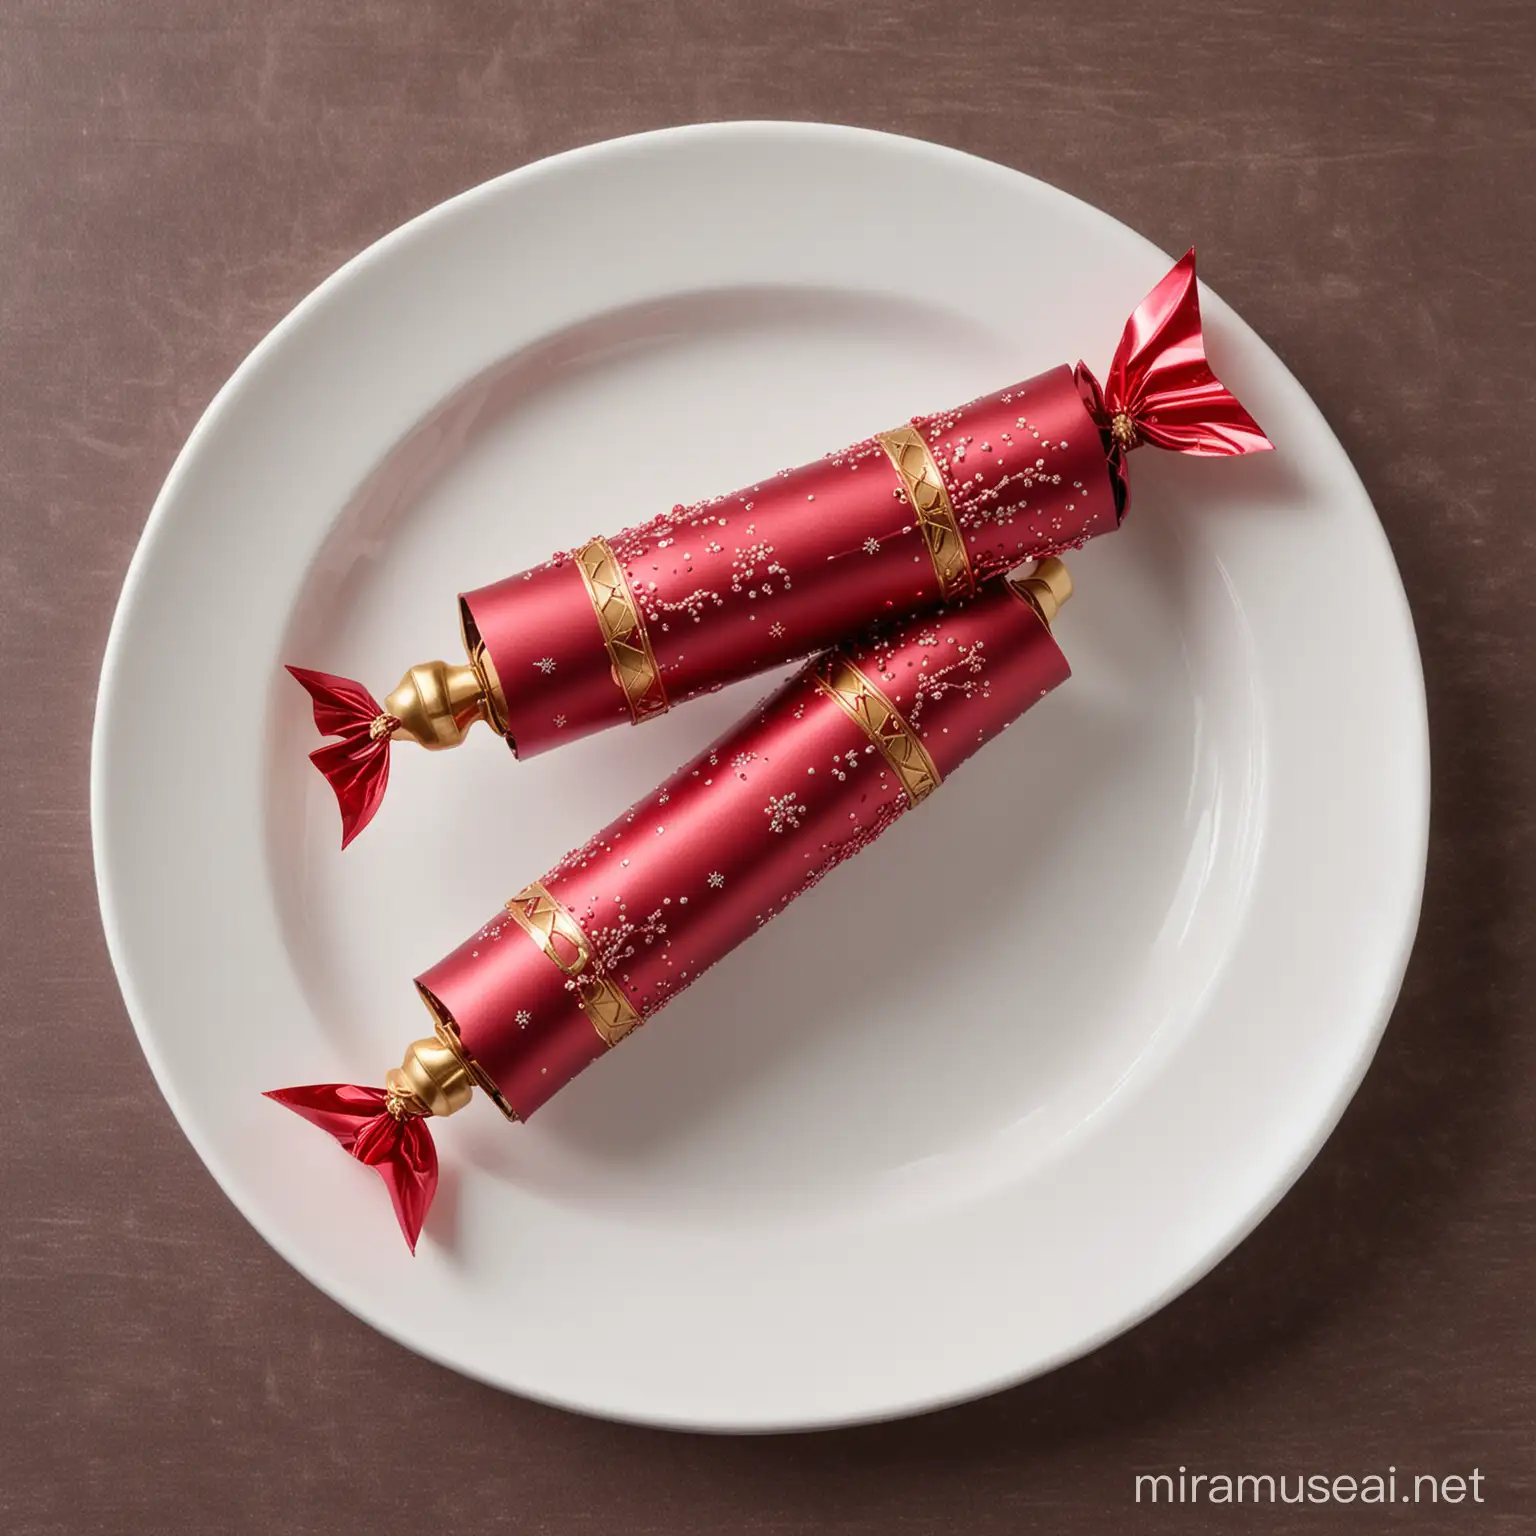 Festive Scene Cranberry Colored Christmas Cracker Amidst Holiday Decor